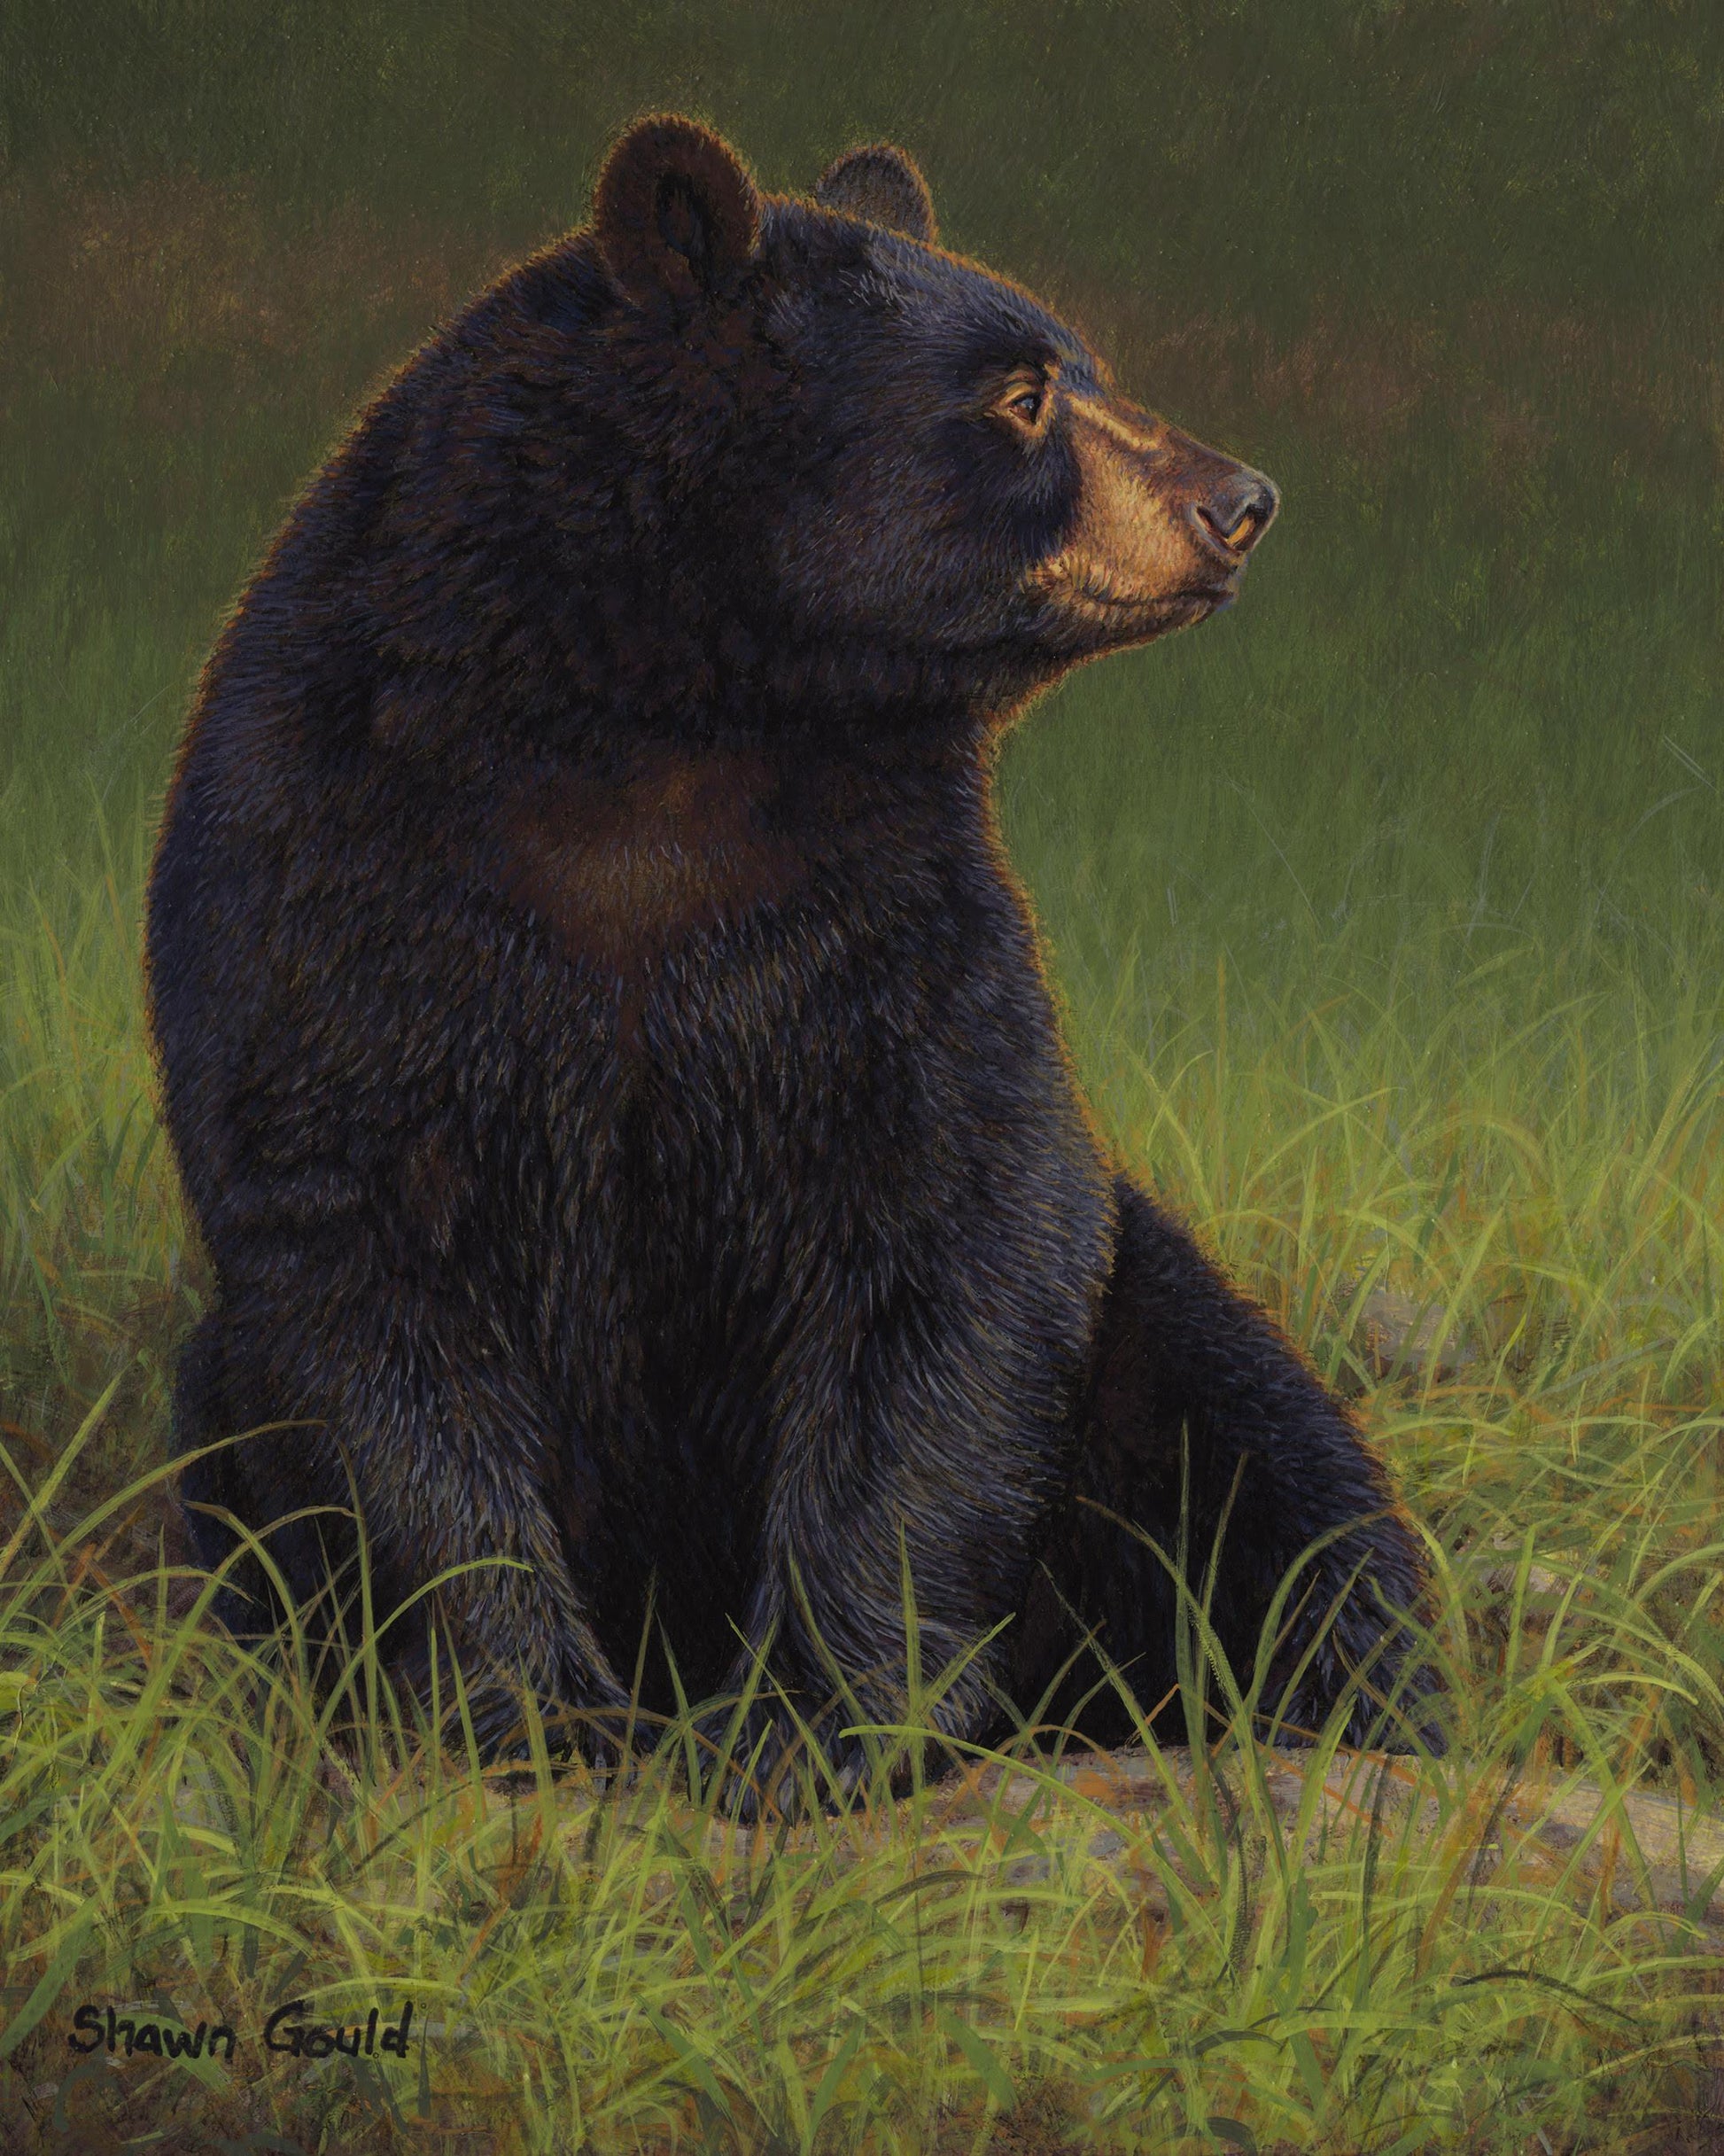 Black Bear Repose-Painting-Shawn Gould-Sorrel Sky Gallery